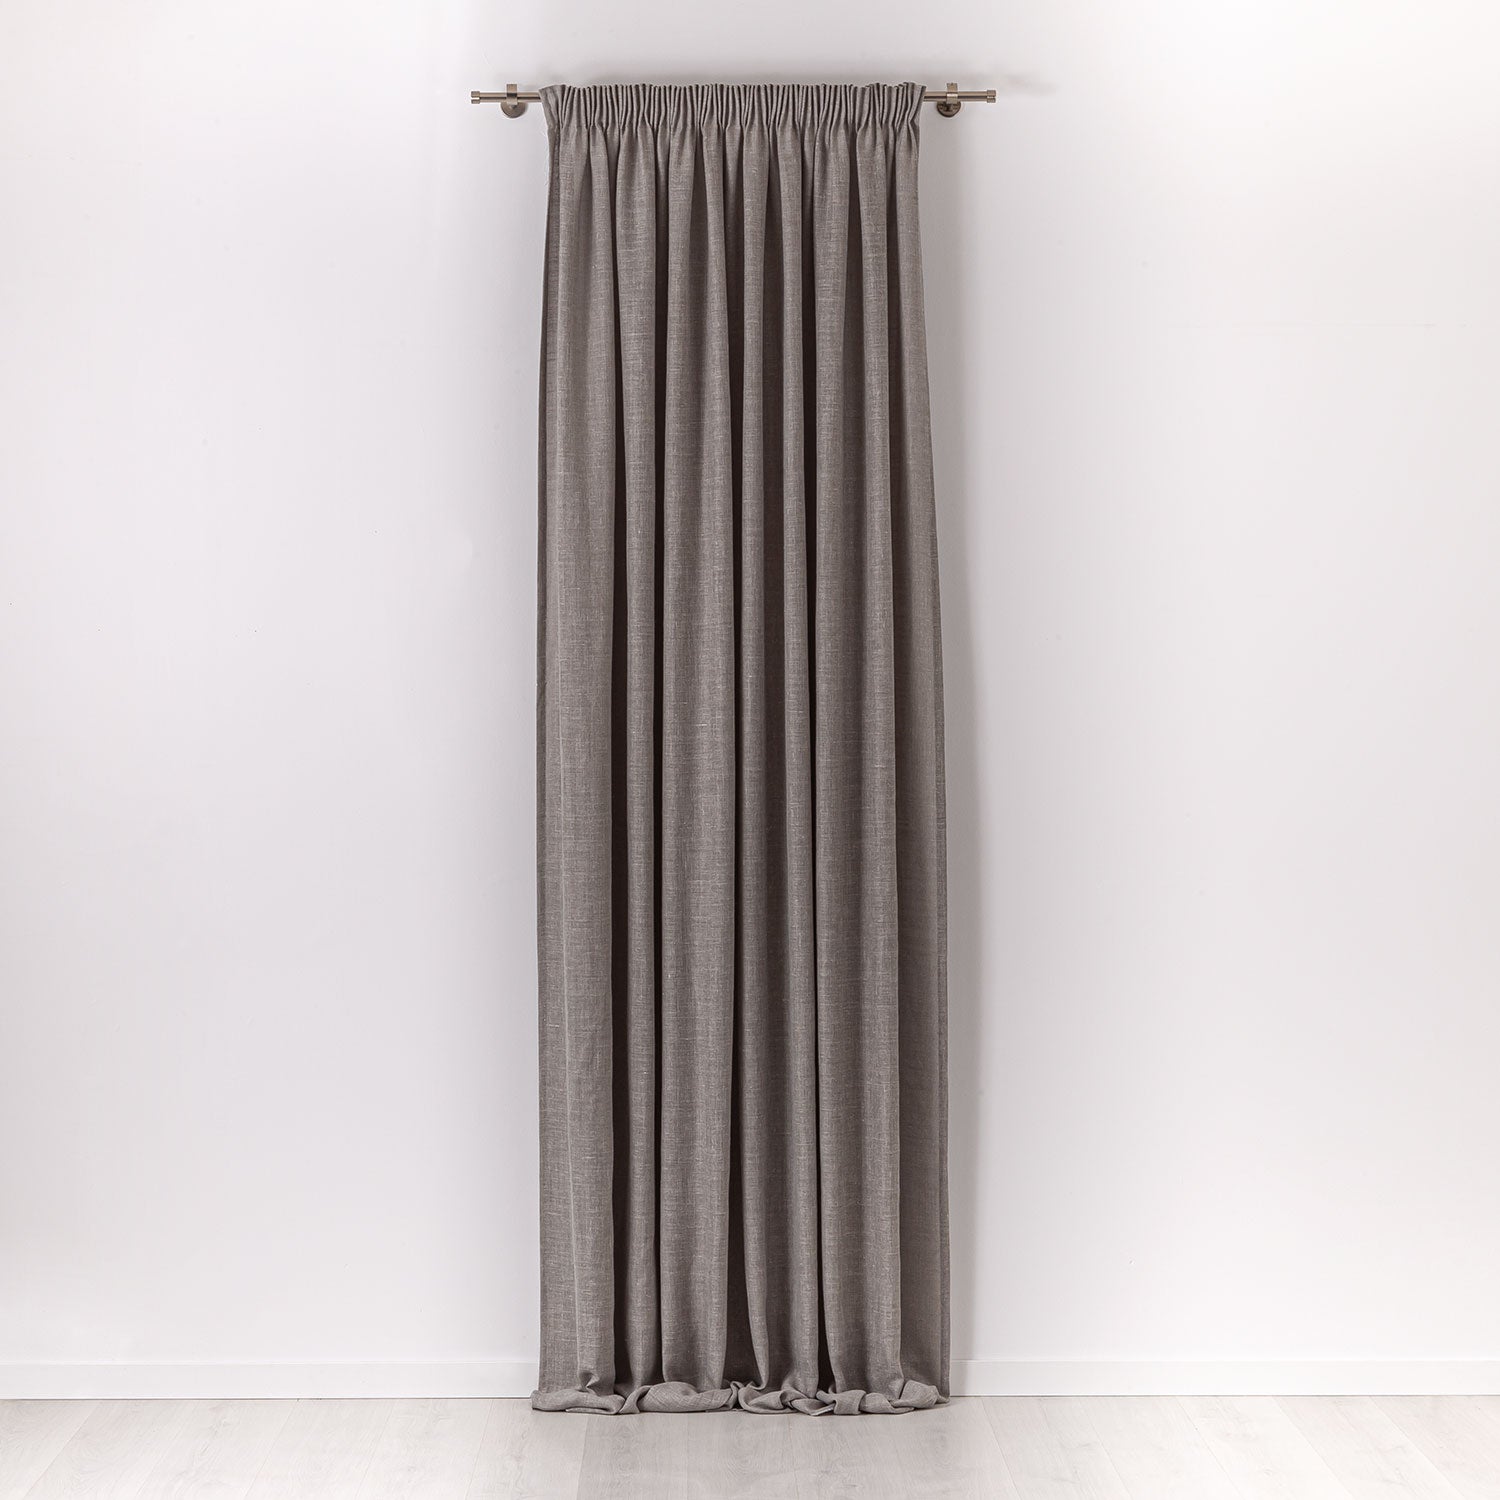 Cortina cinta gris cortinas salon tanslucida 280 x 300